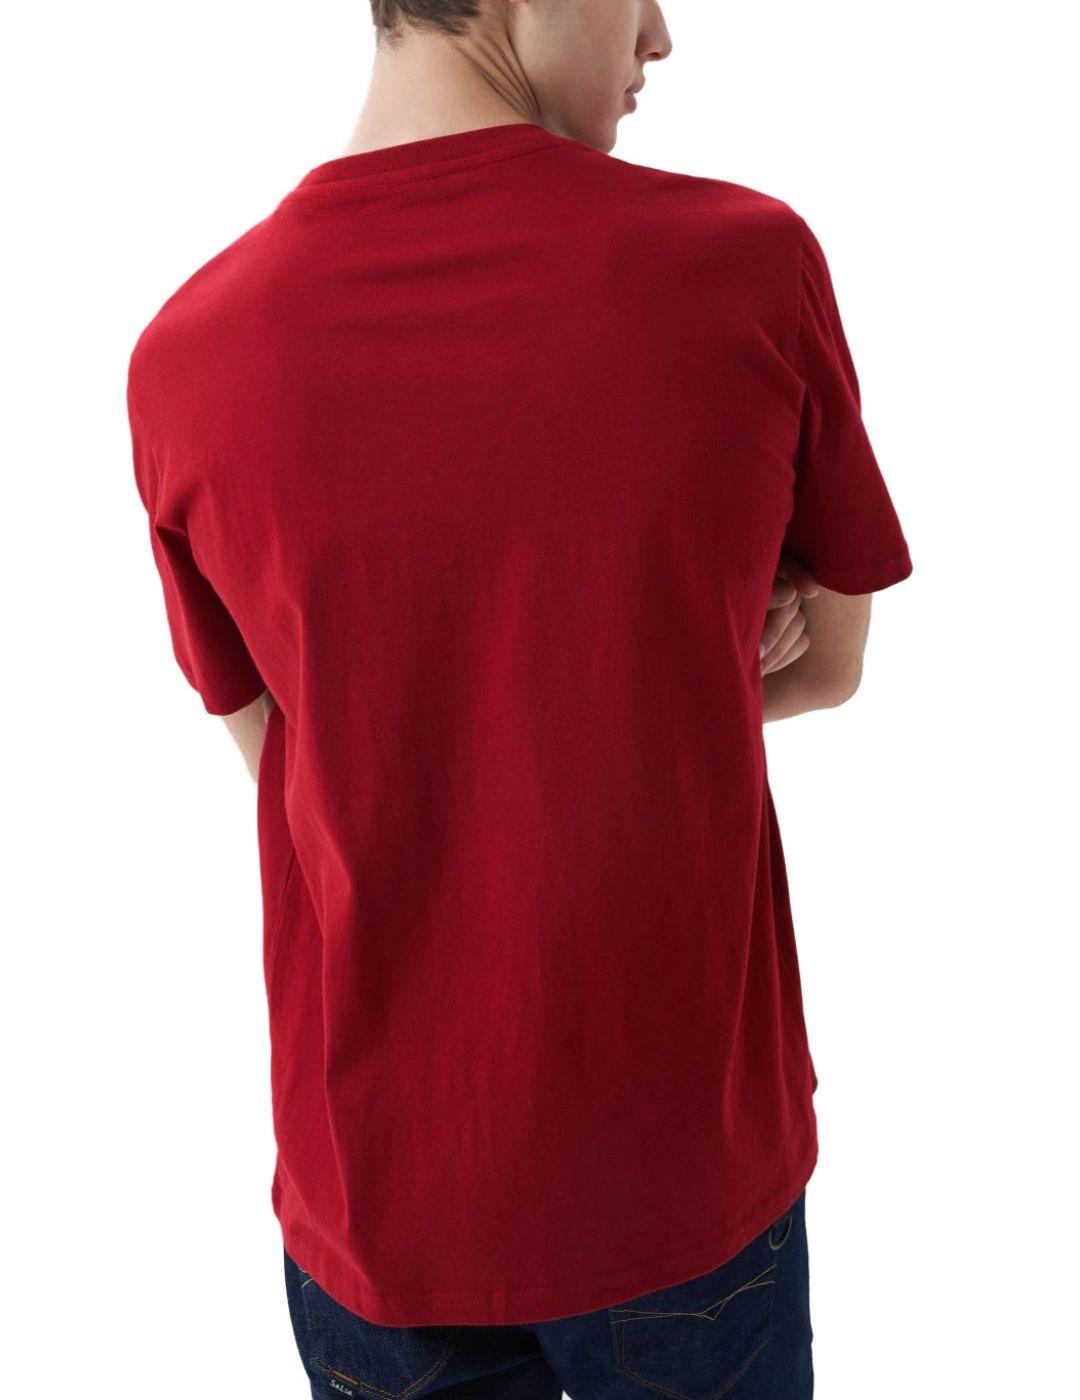 Camiseta Salsa branding roja para hombre -a